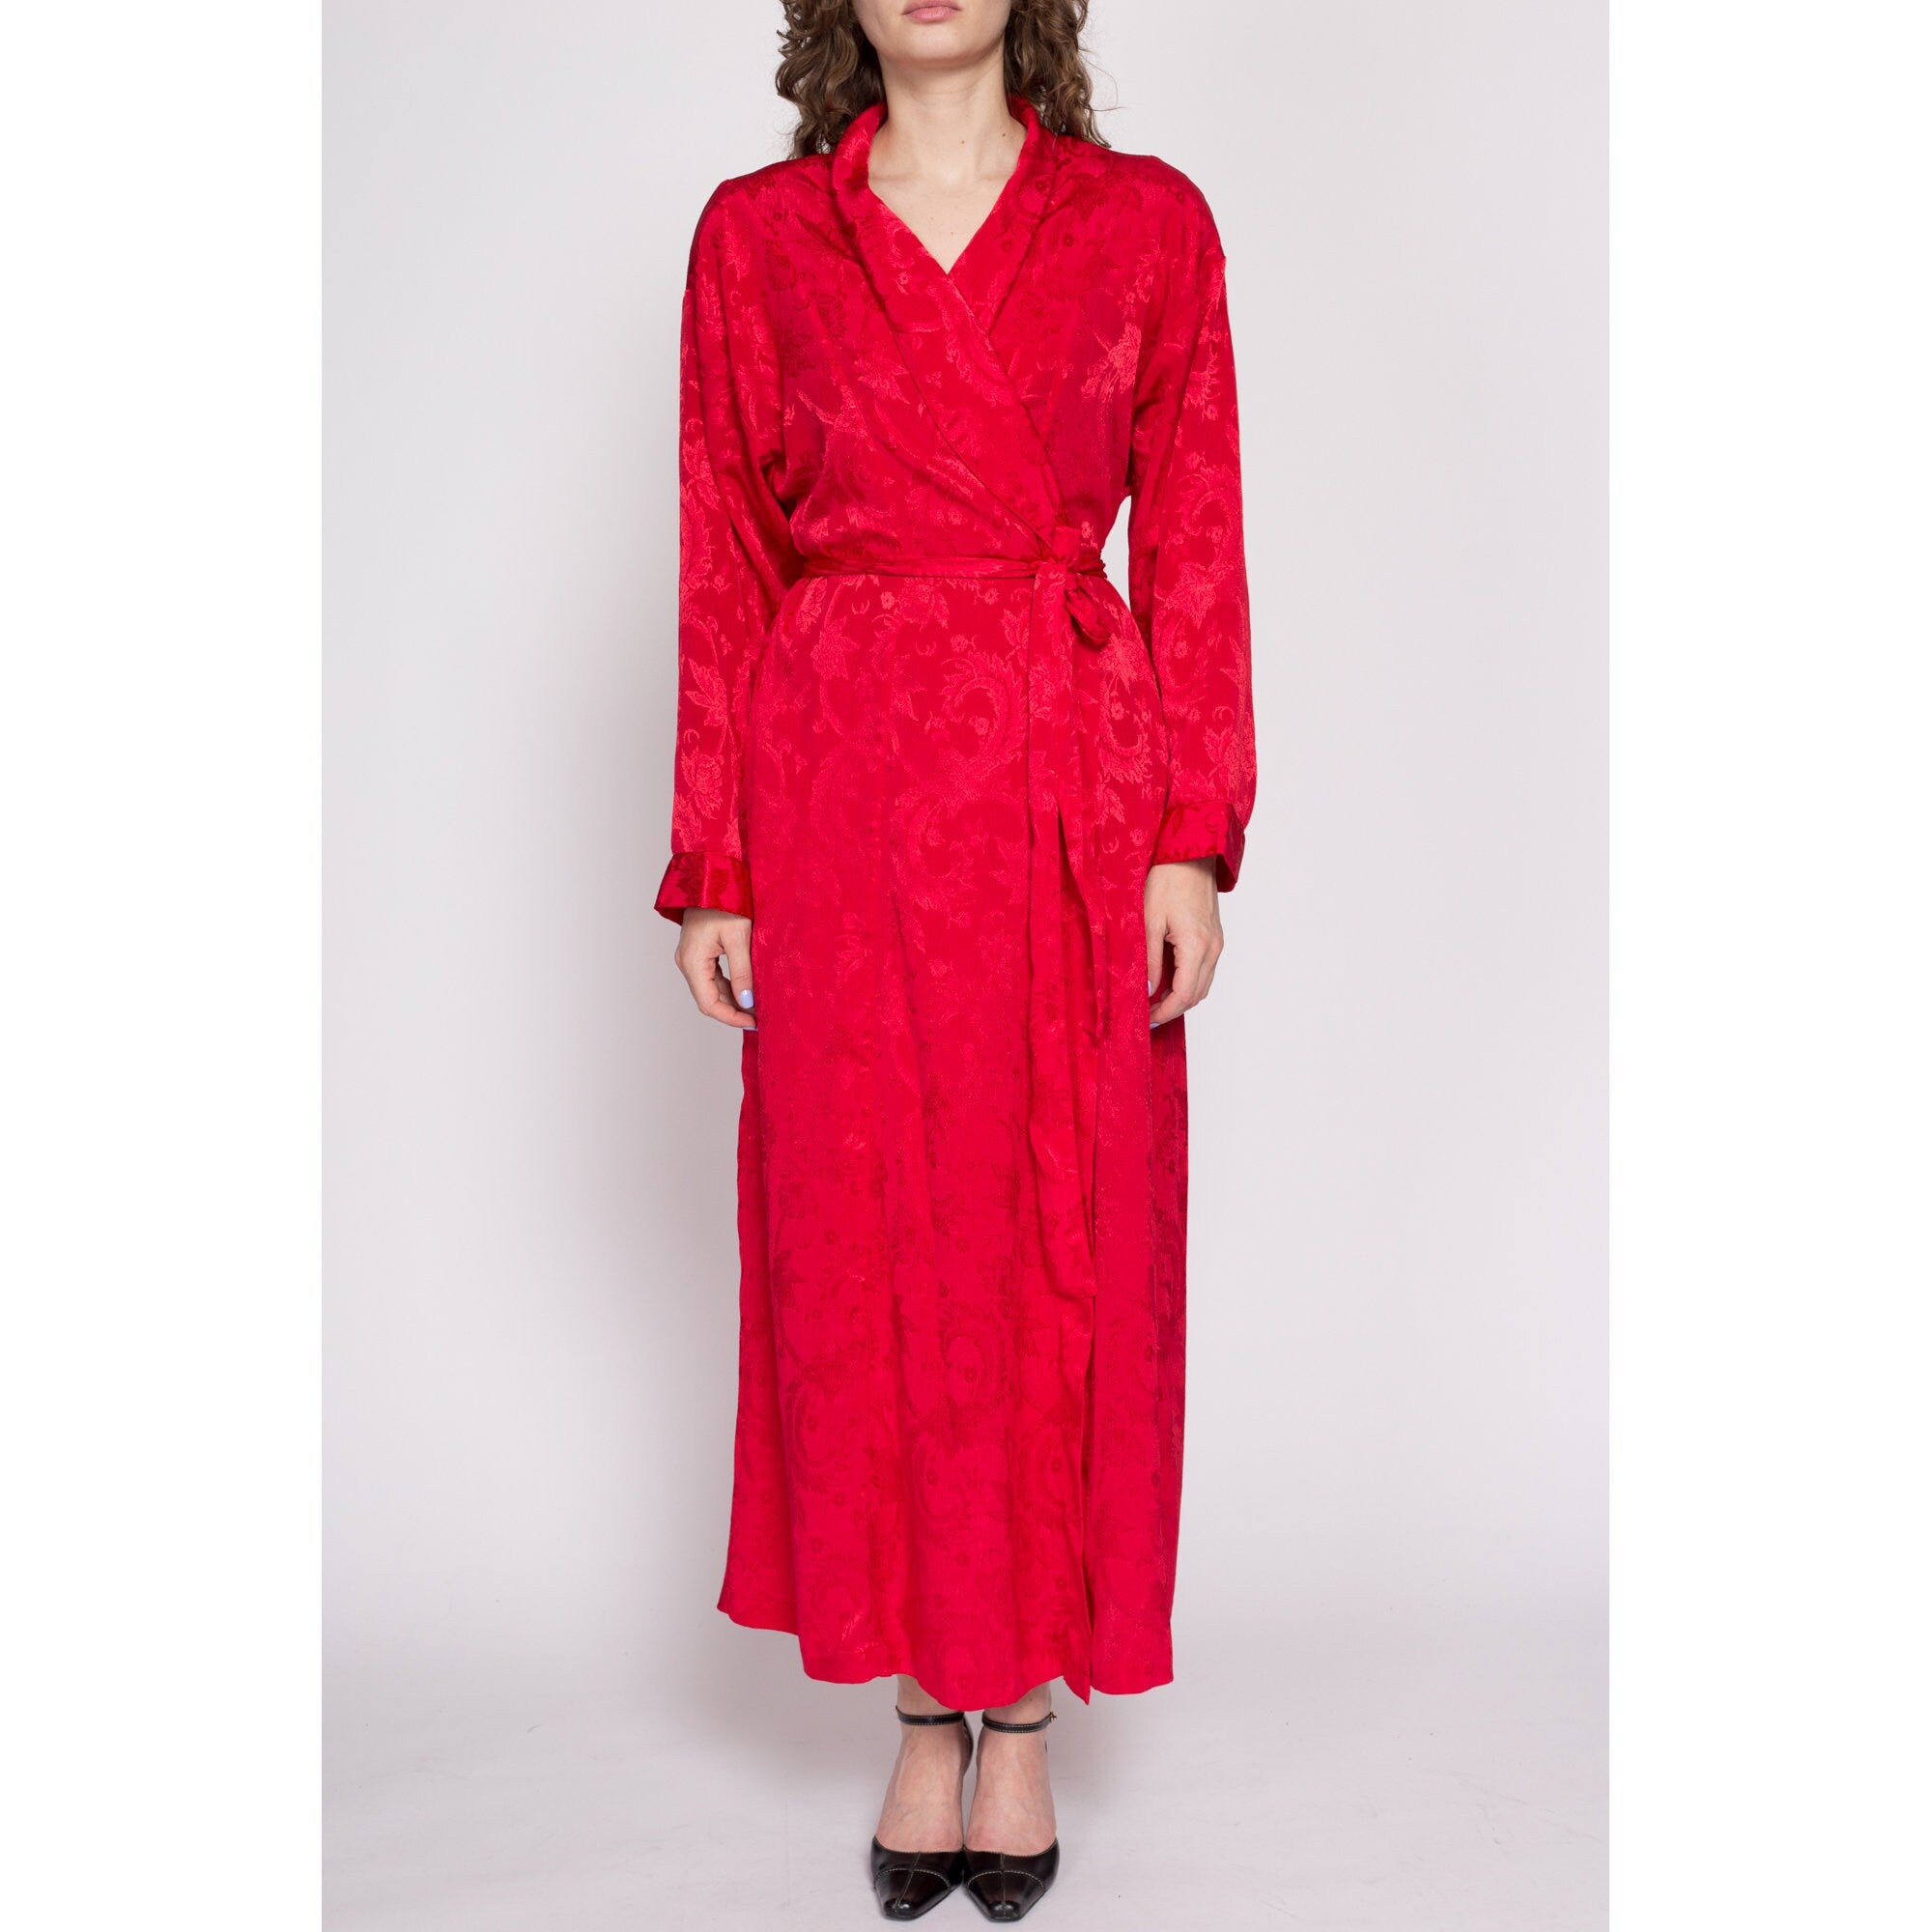 Buy Satin Red, Black Robe, Housecoat (Free Size, HC-52) for Women Online at  Secret Wish | 1646